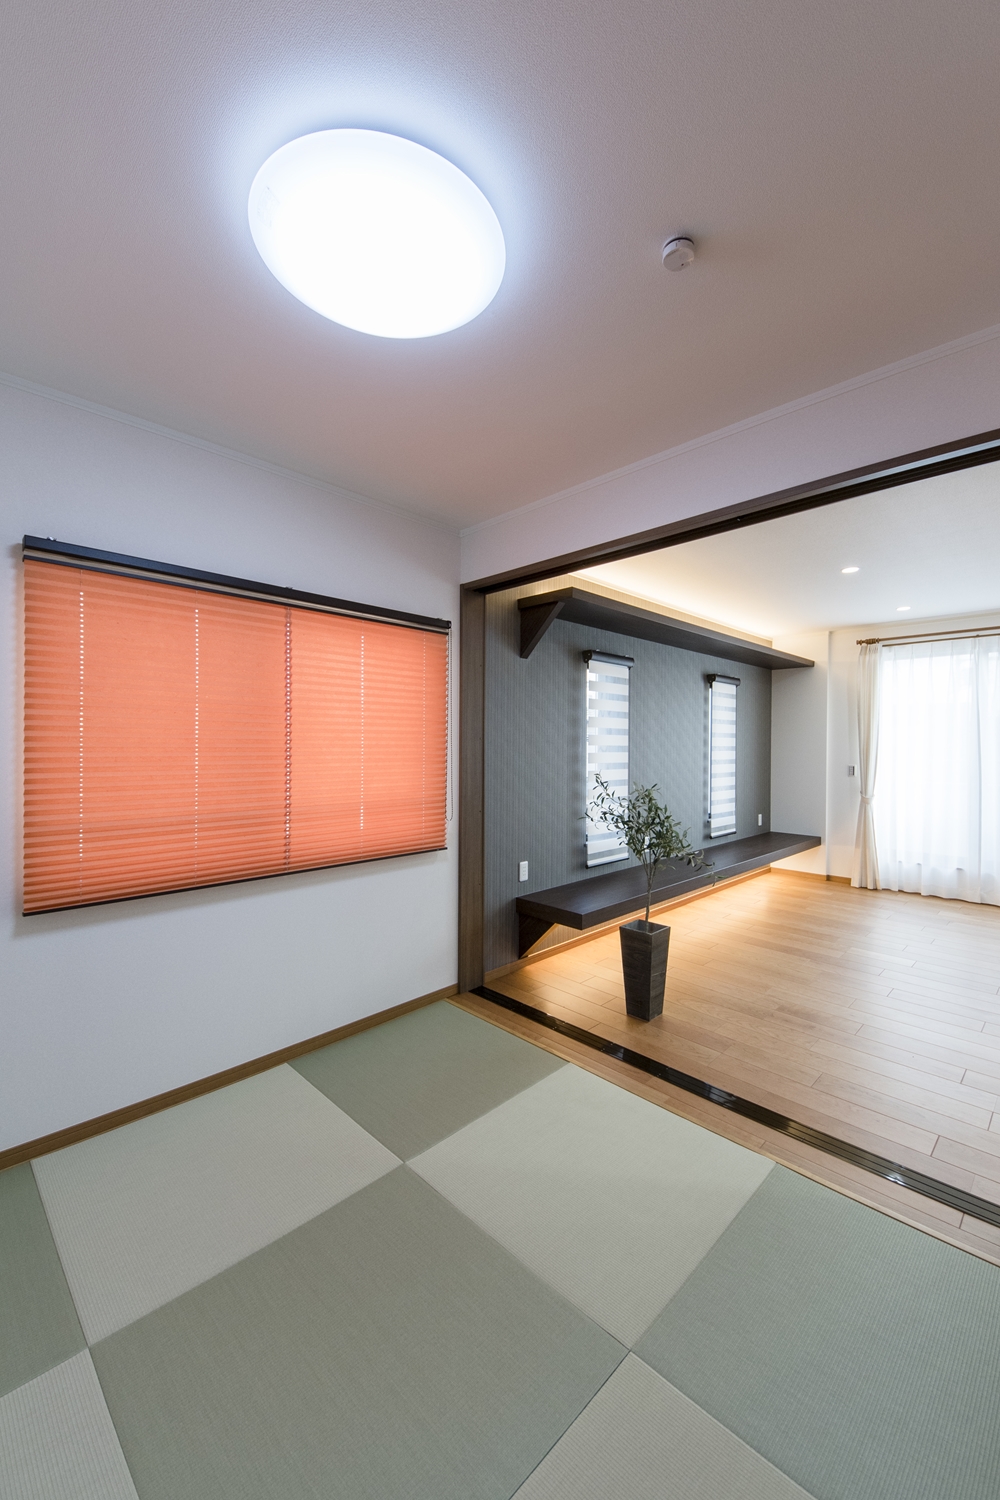 2F畳敷洋室(子世帯)／爽やかなグリーンの畳を市松敷きにしたモダンな空間。